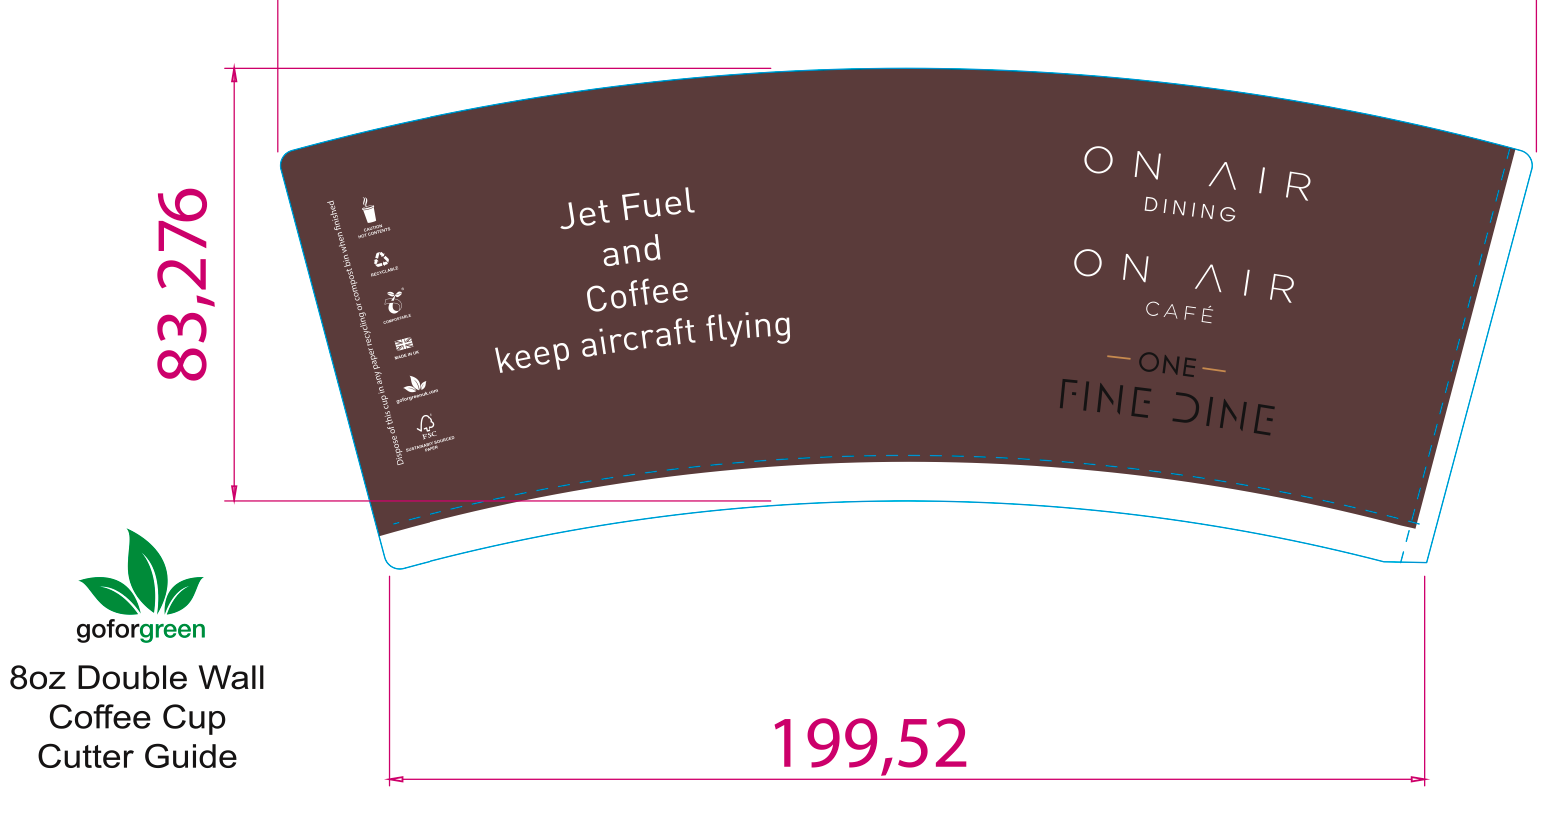 1,000 x 8oz On Air Dining DW Coffee cups - 1